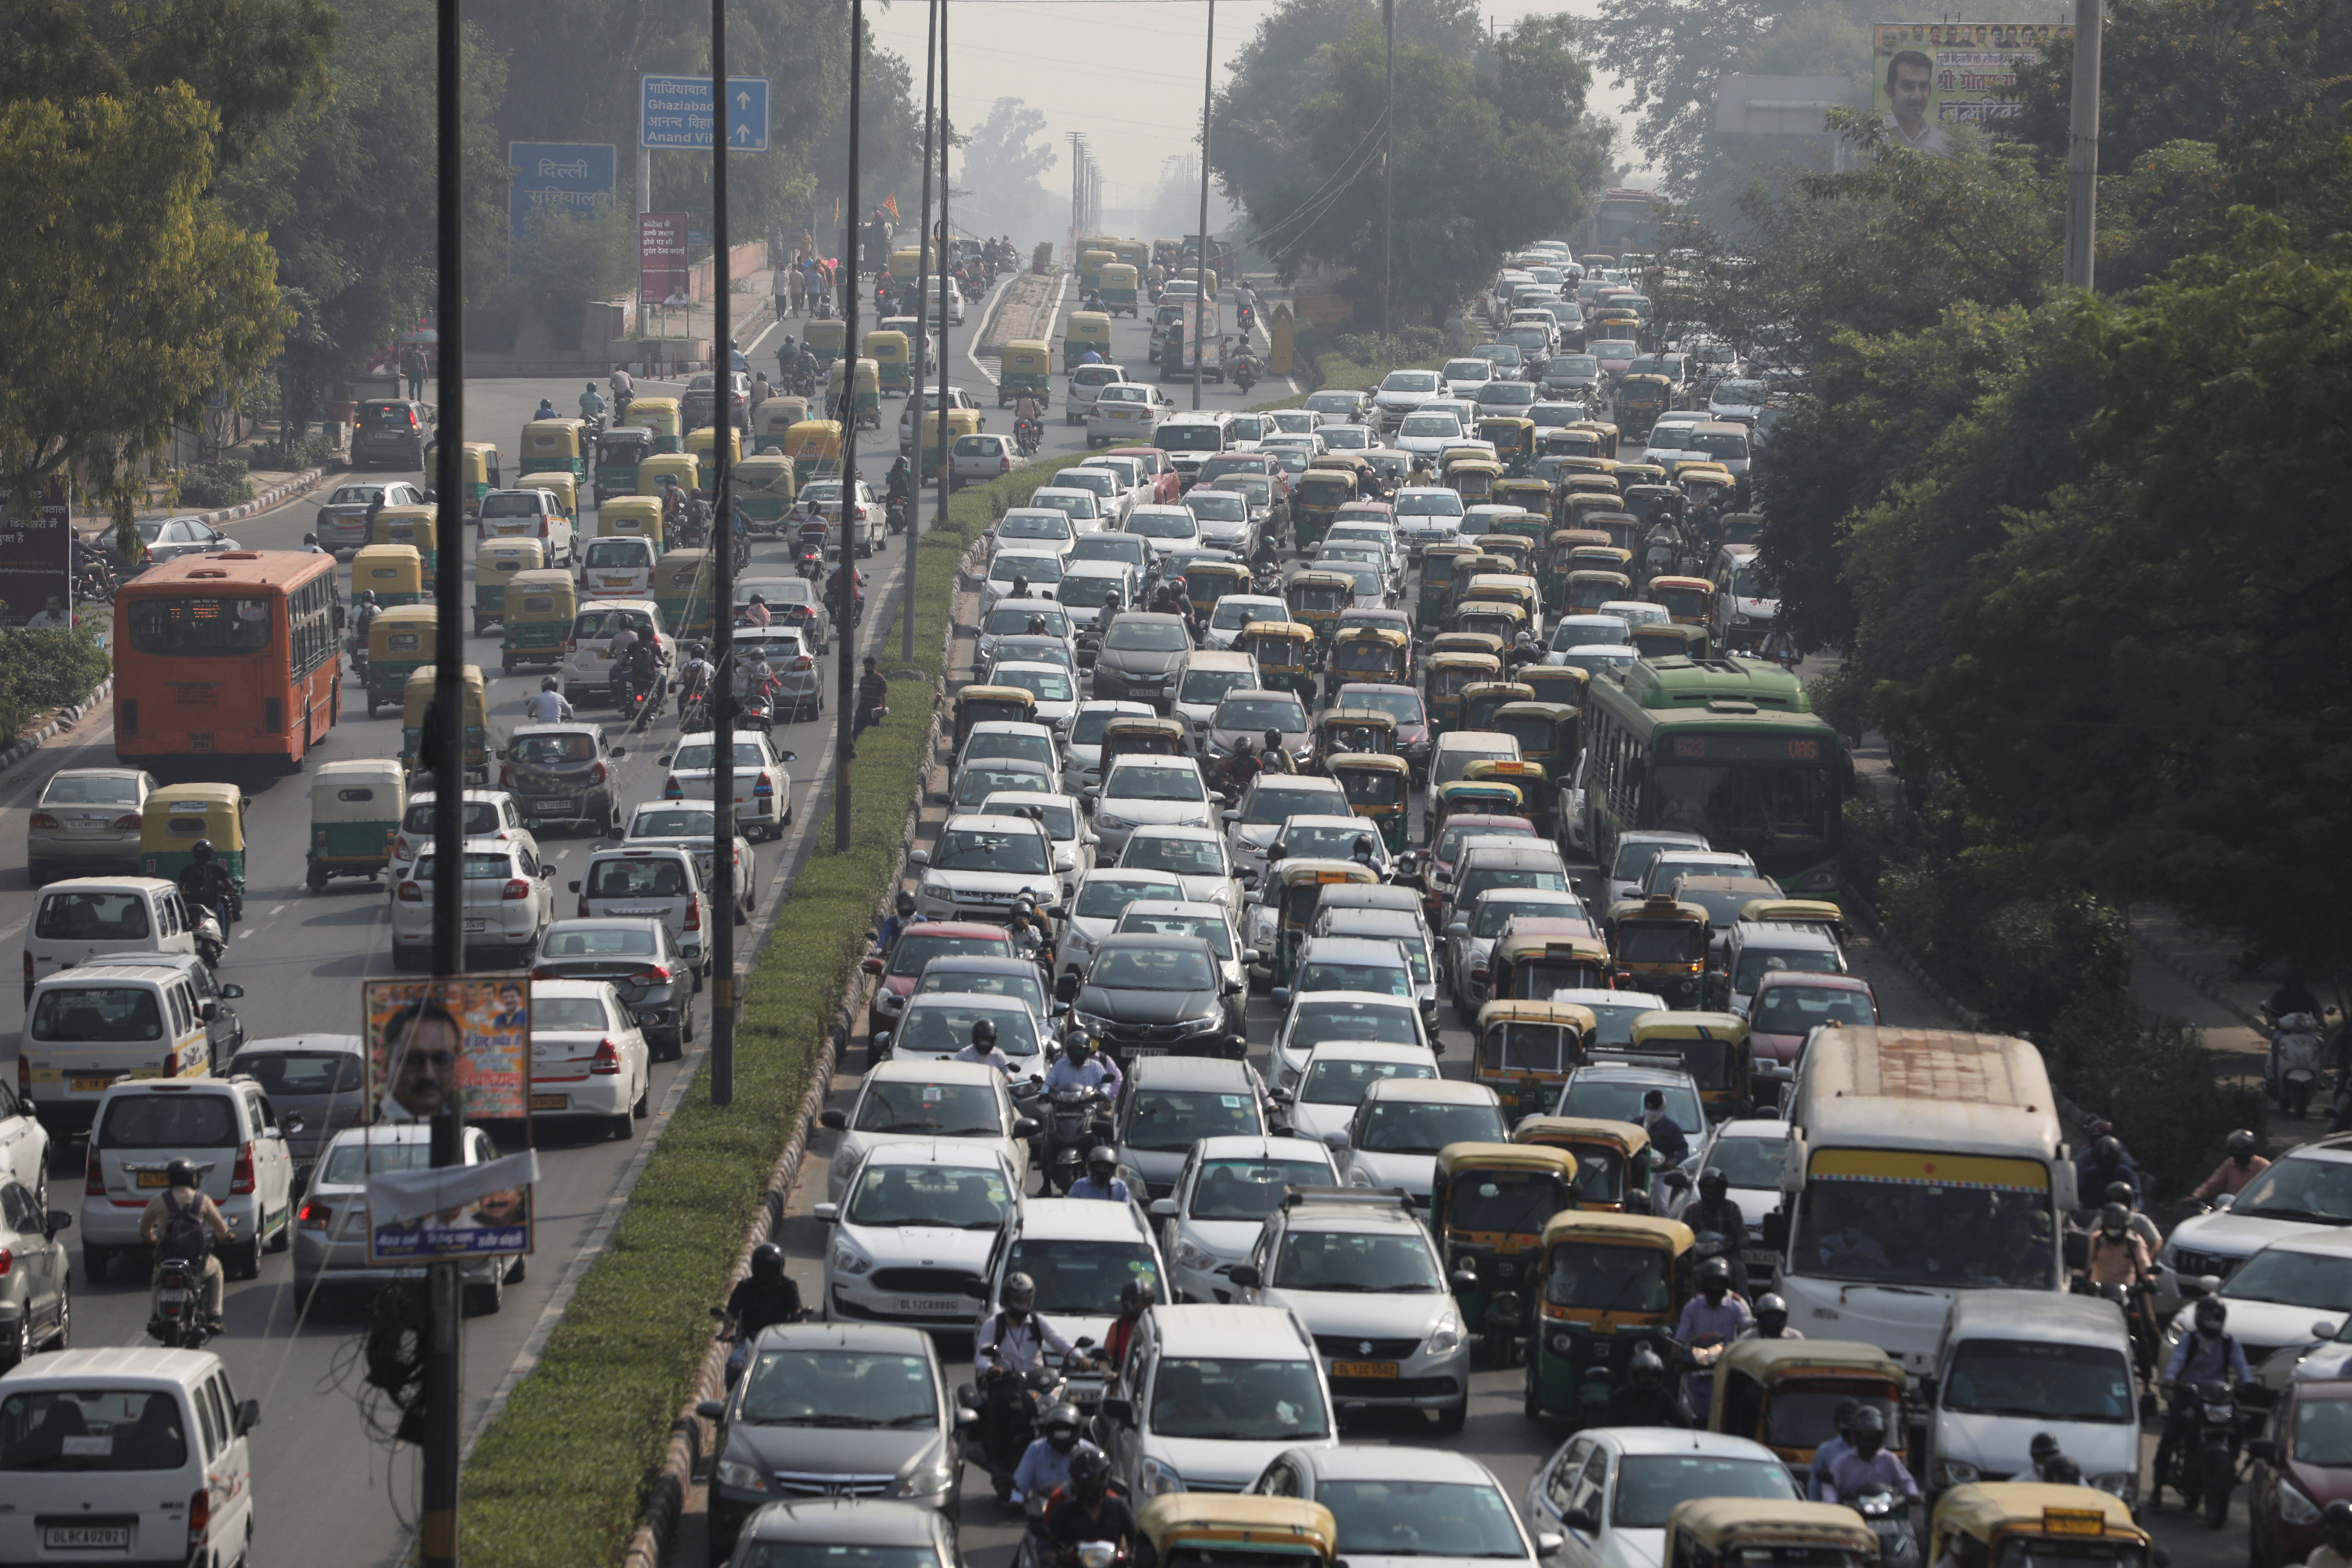 Vehicles queue at a traffic light on a hazy morning in New Delhi